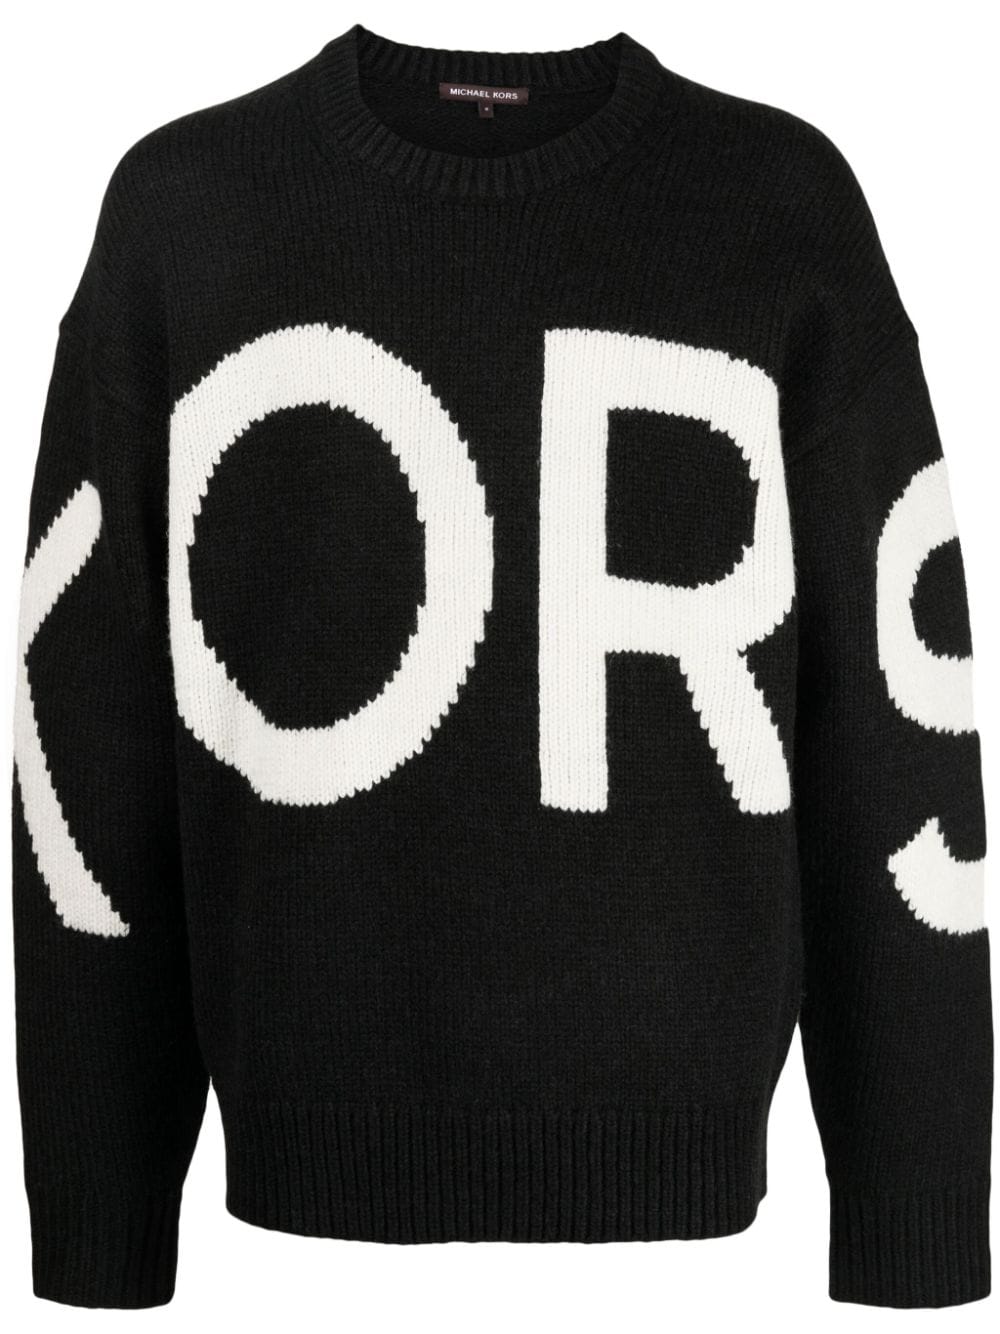 Michael Kors Kors Knit Sweater In Black